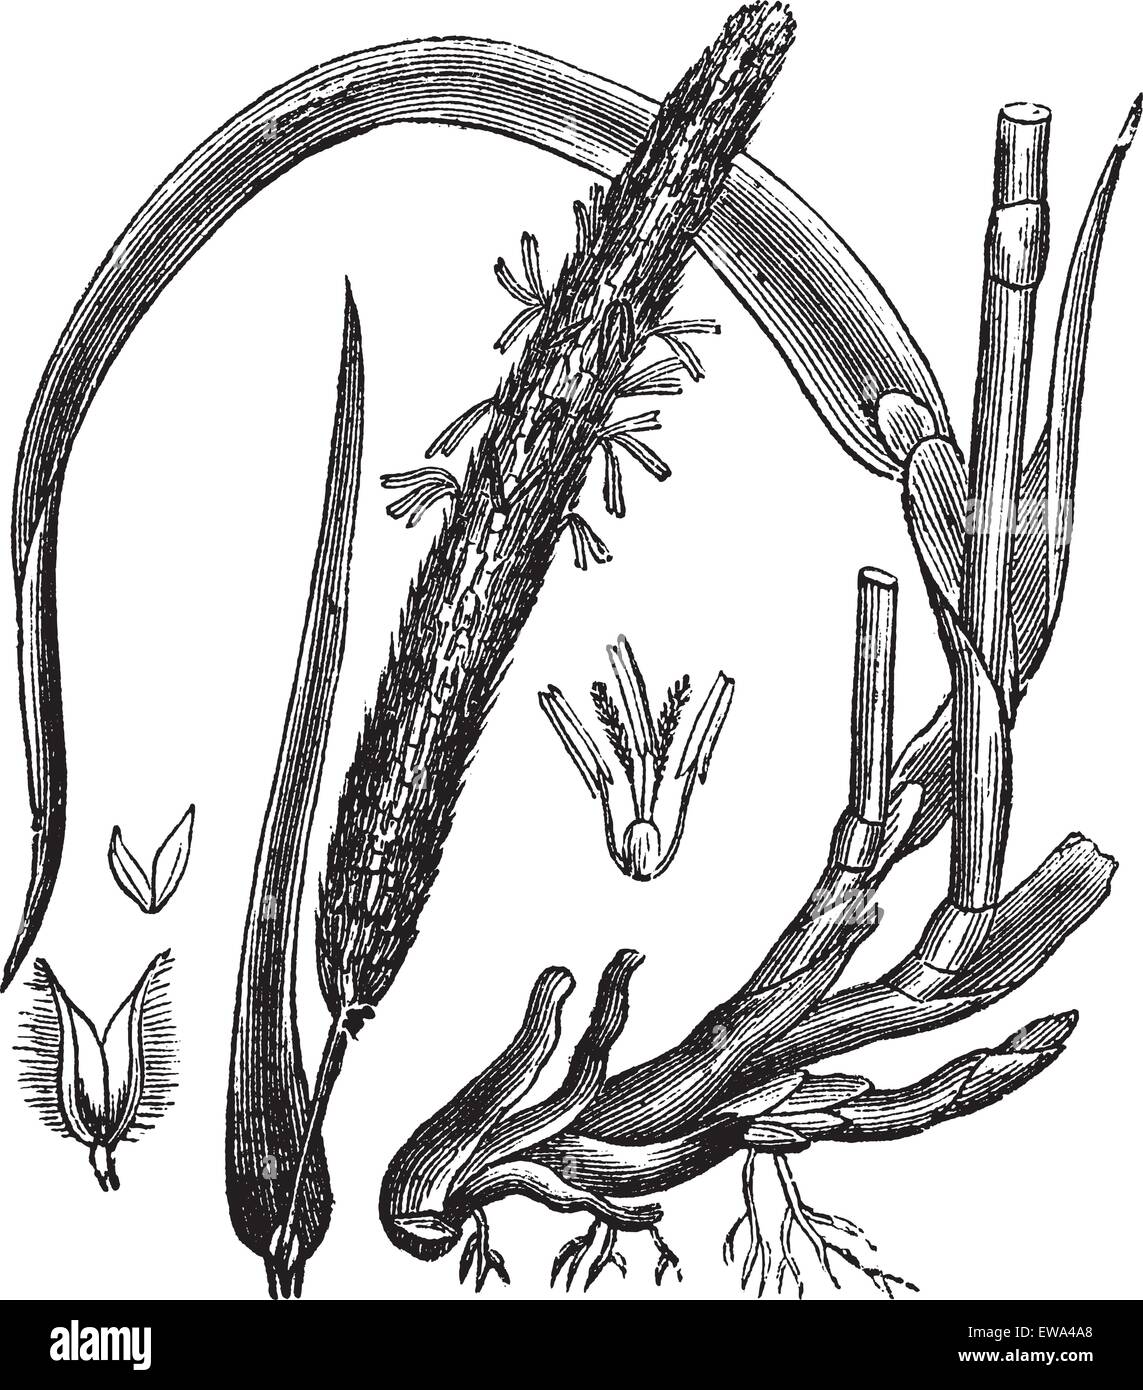 Timothy-grass (Phleum pratense), vintage engraved illustration.Trousset encyclopedia (1886 - 1891). Stock Vector